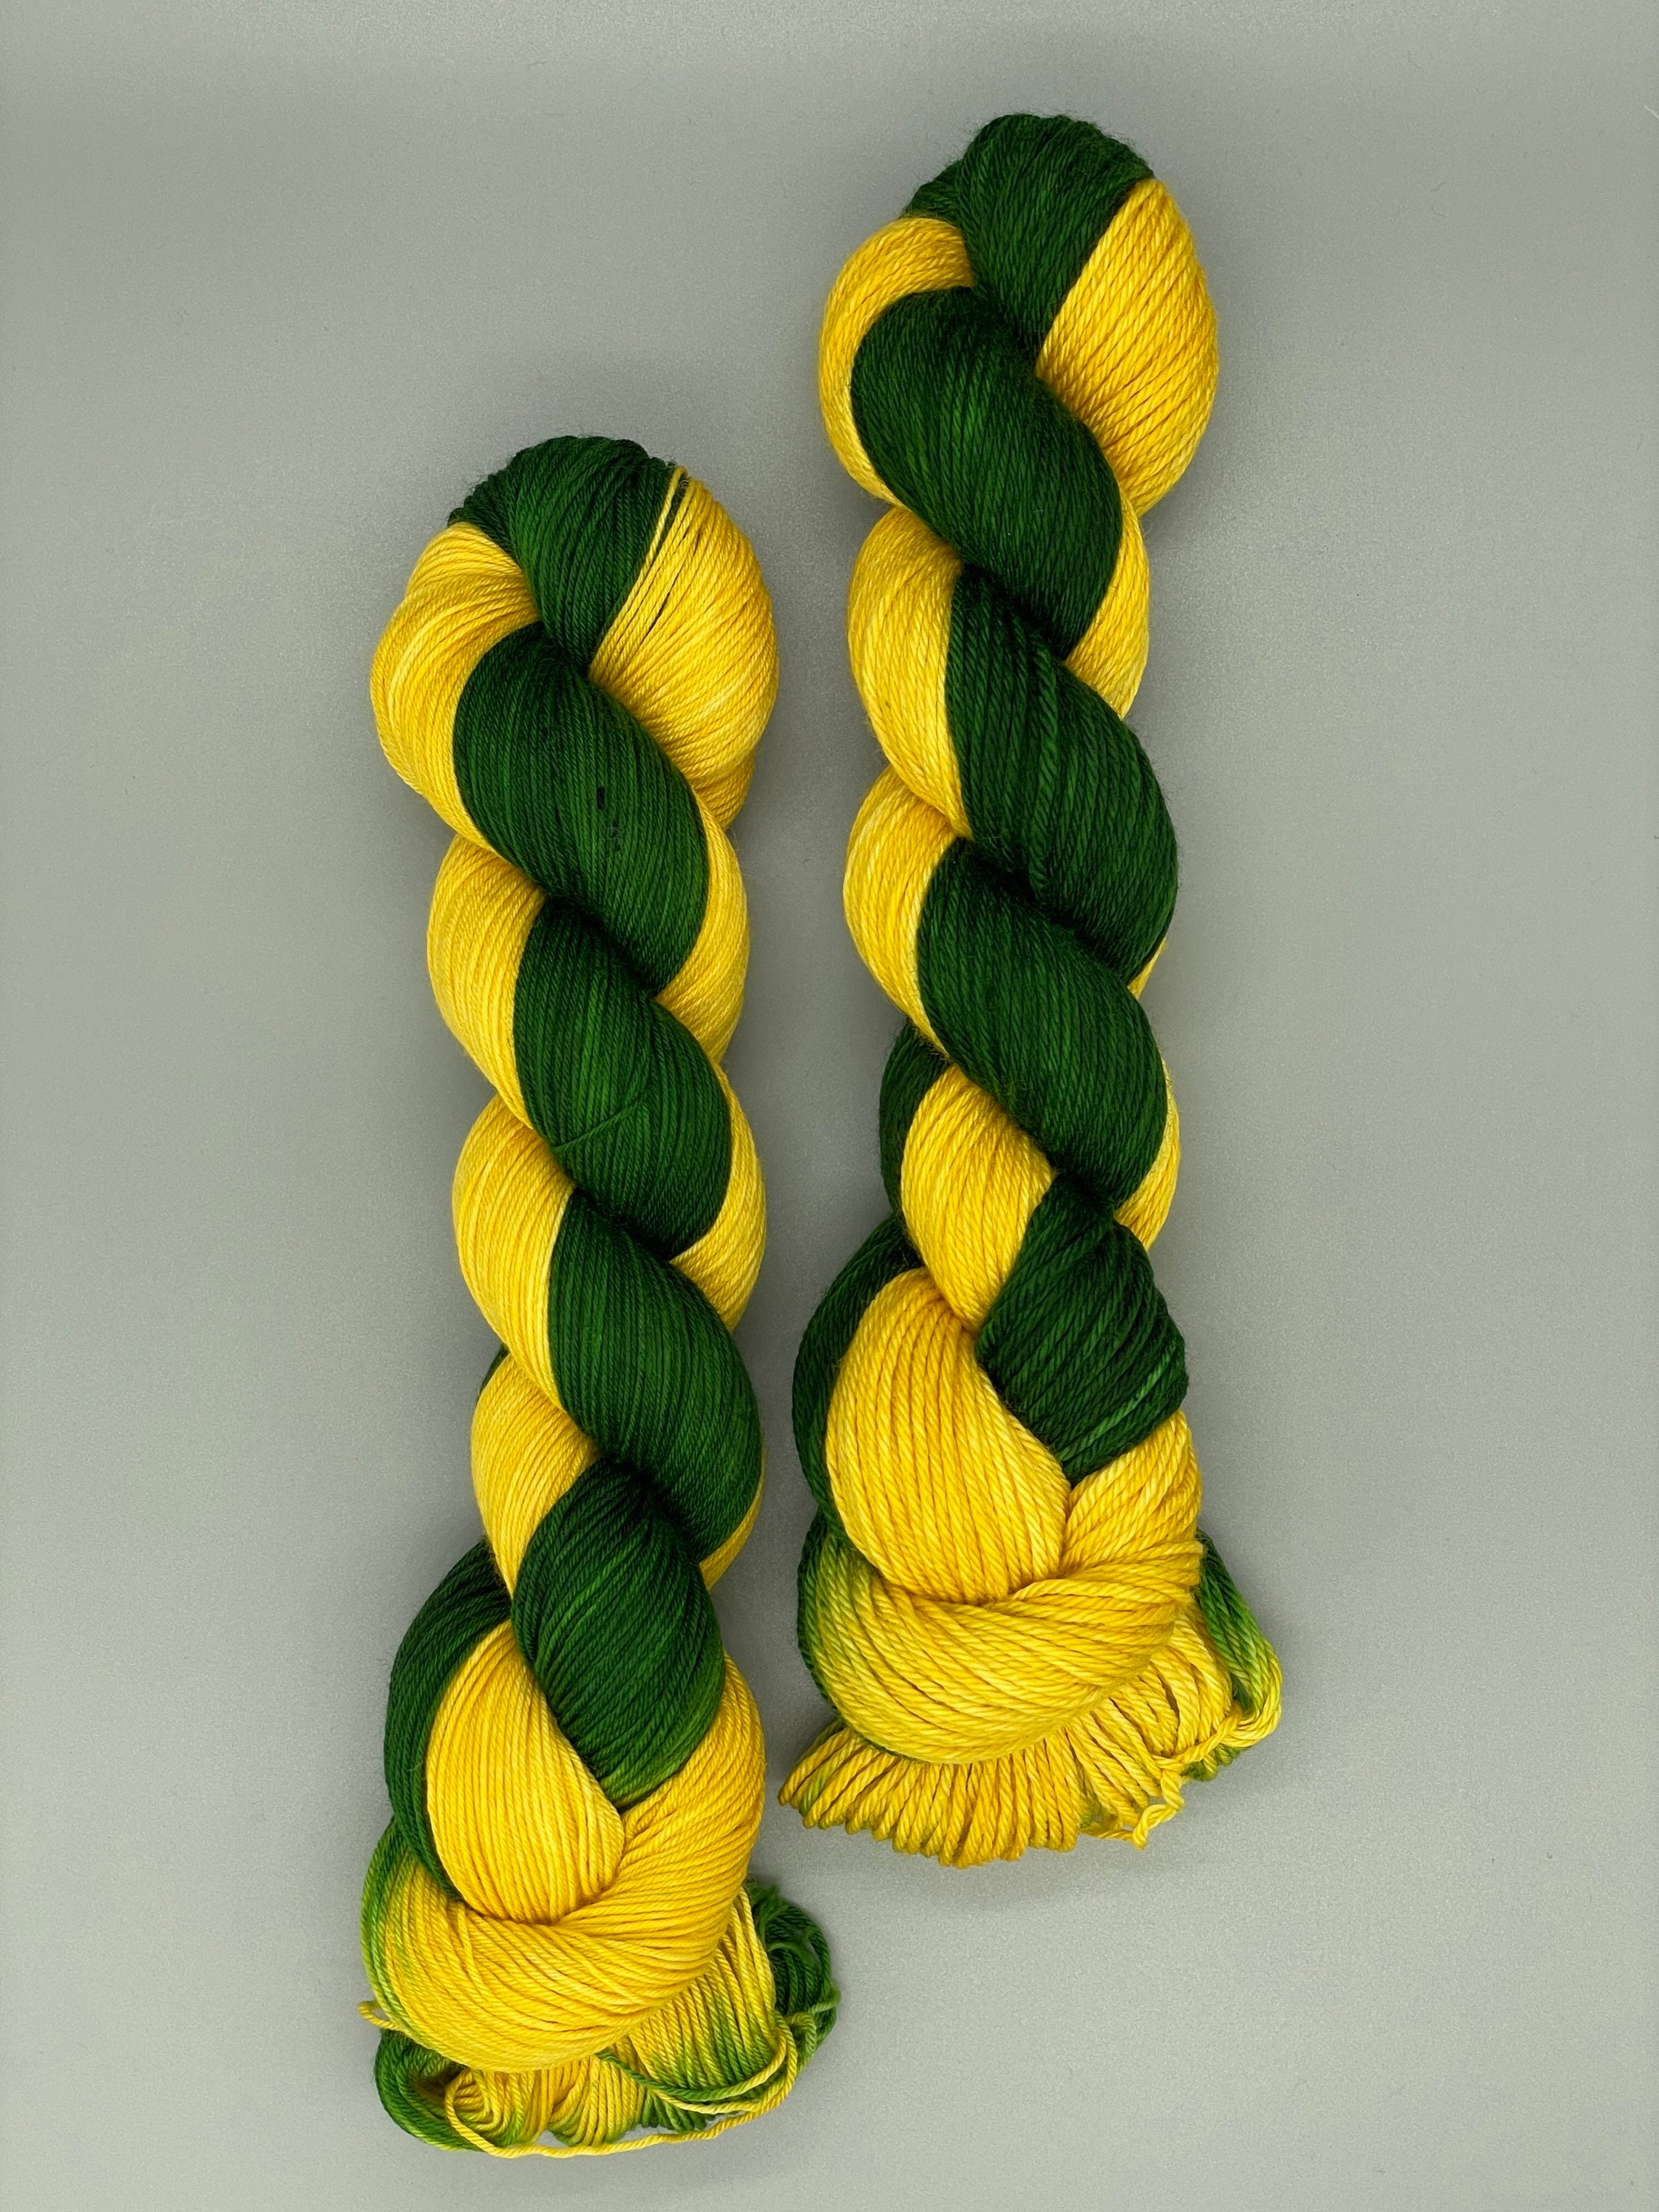 Bouquet Set of 5 Superwash Wool,worsted Weight Yarn,91m/100yds Green 